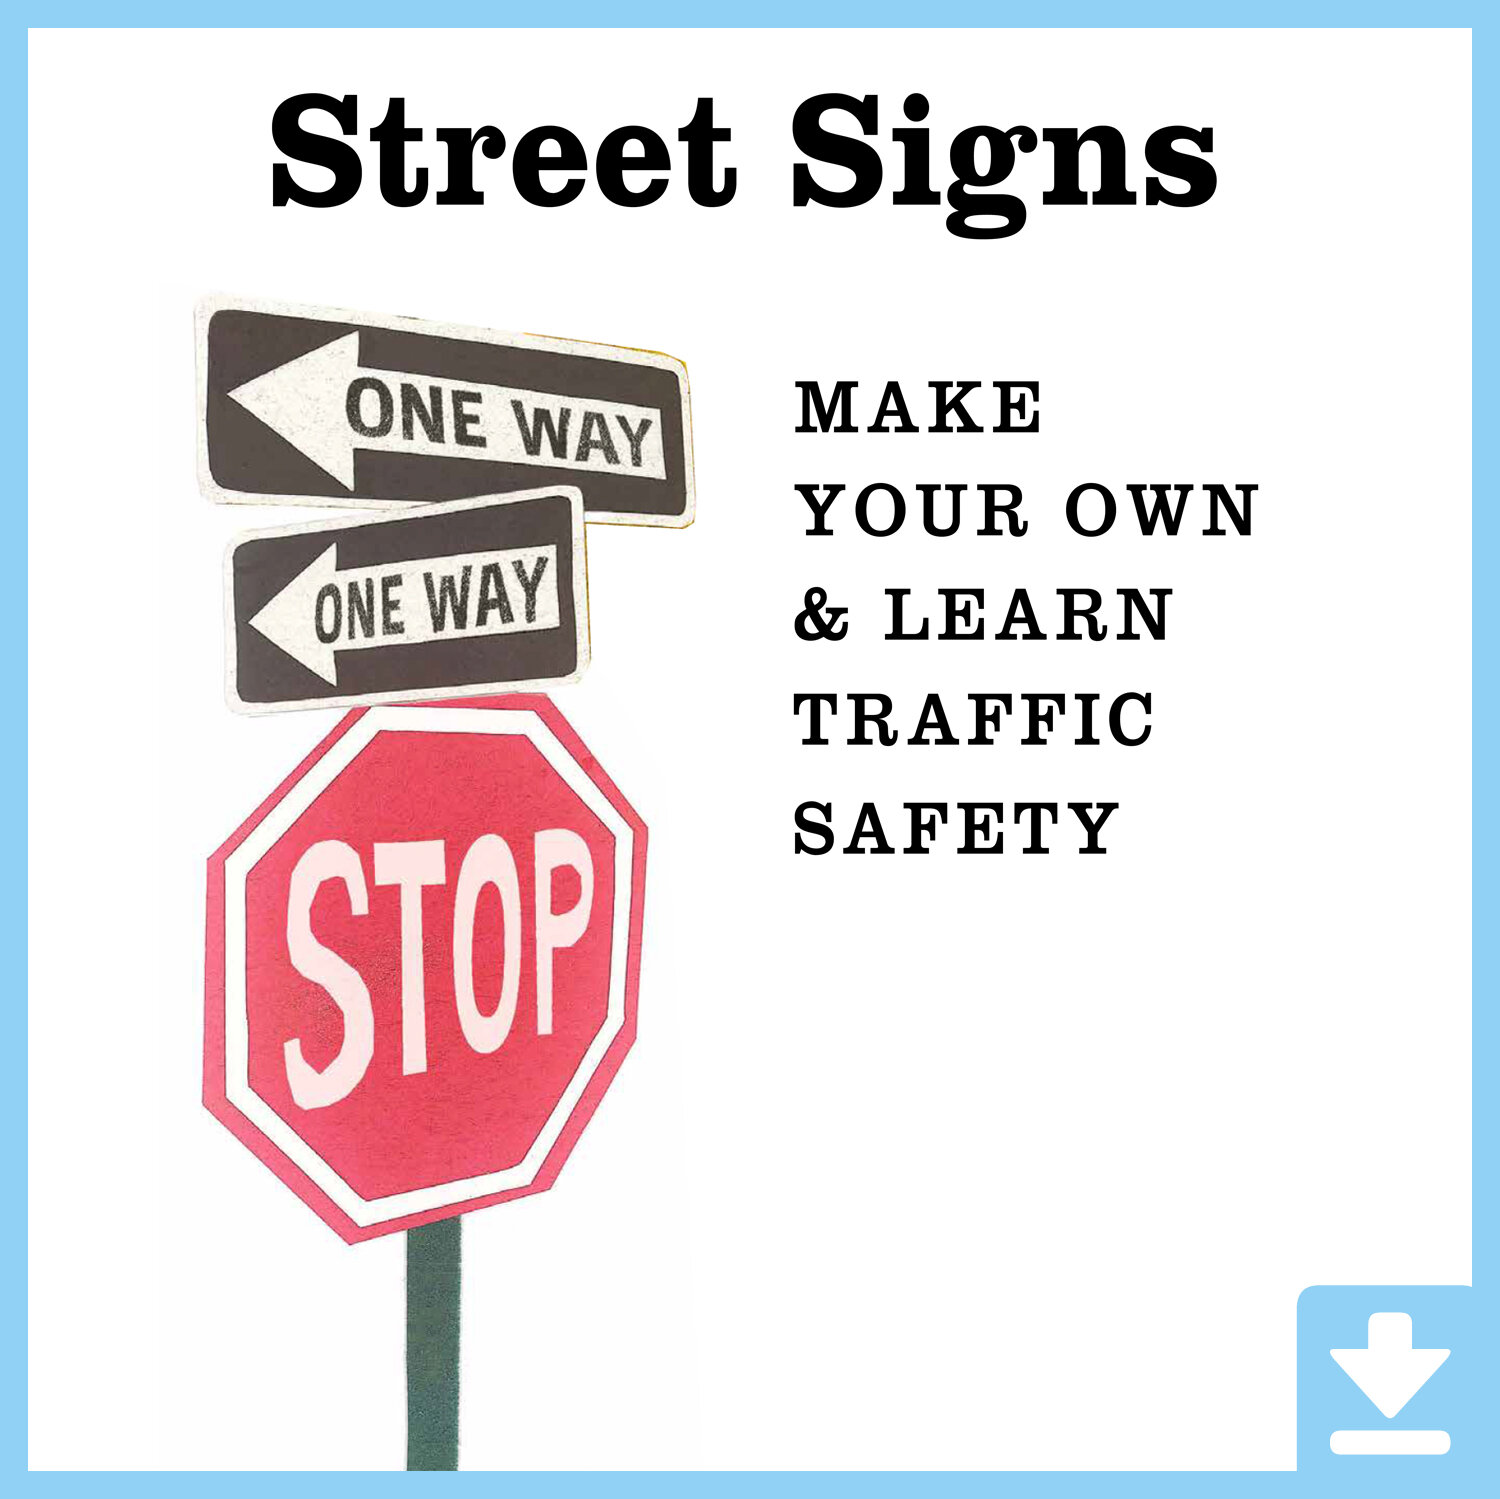 Street-Signs-Traffic-Safety.jpg